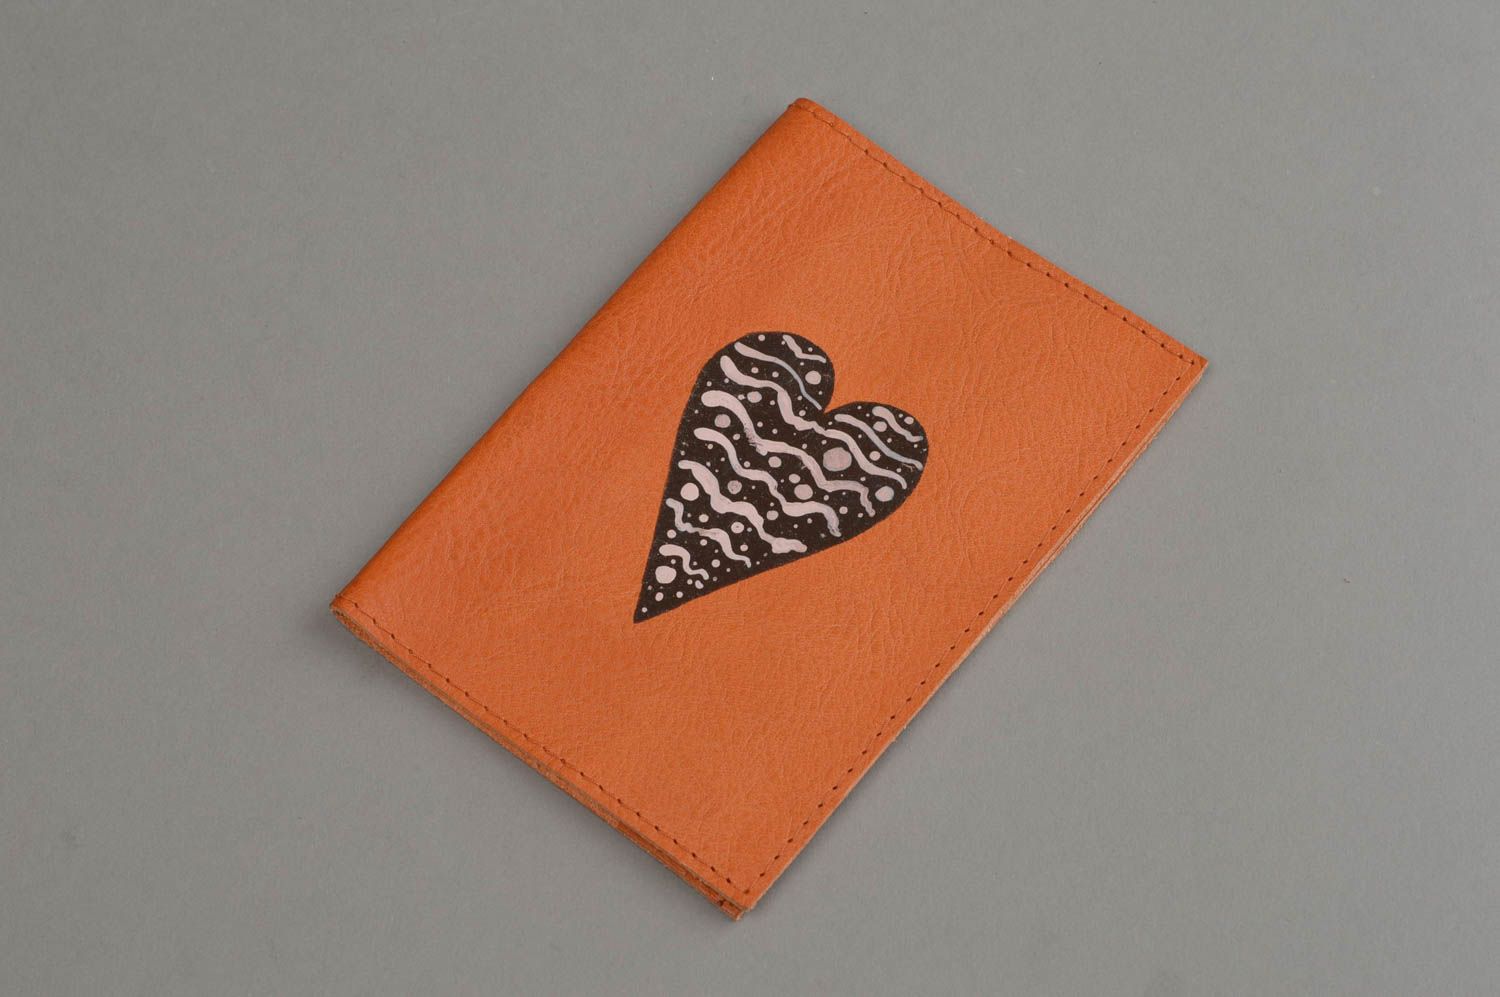 Handmade designer leather passport cover unusual fashion accessories gift ideas photo 2